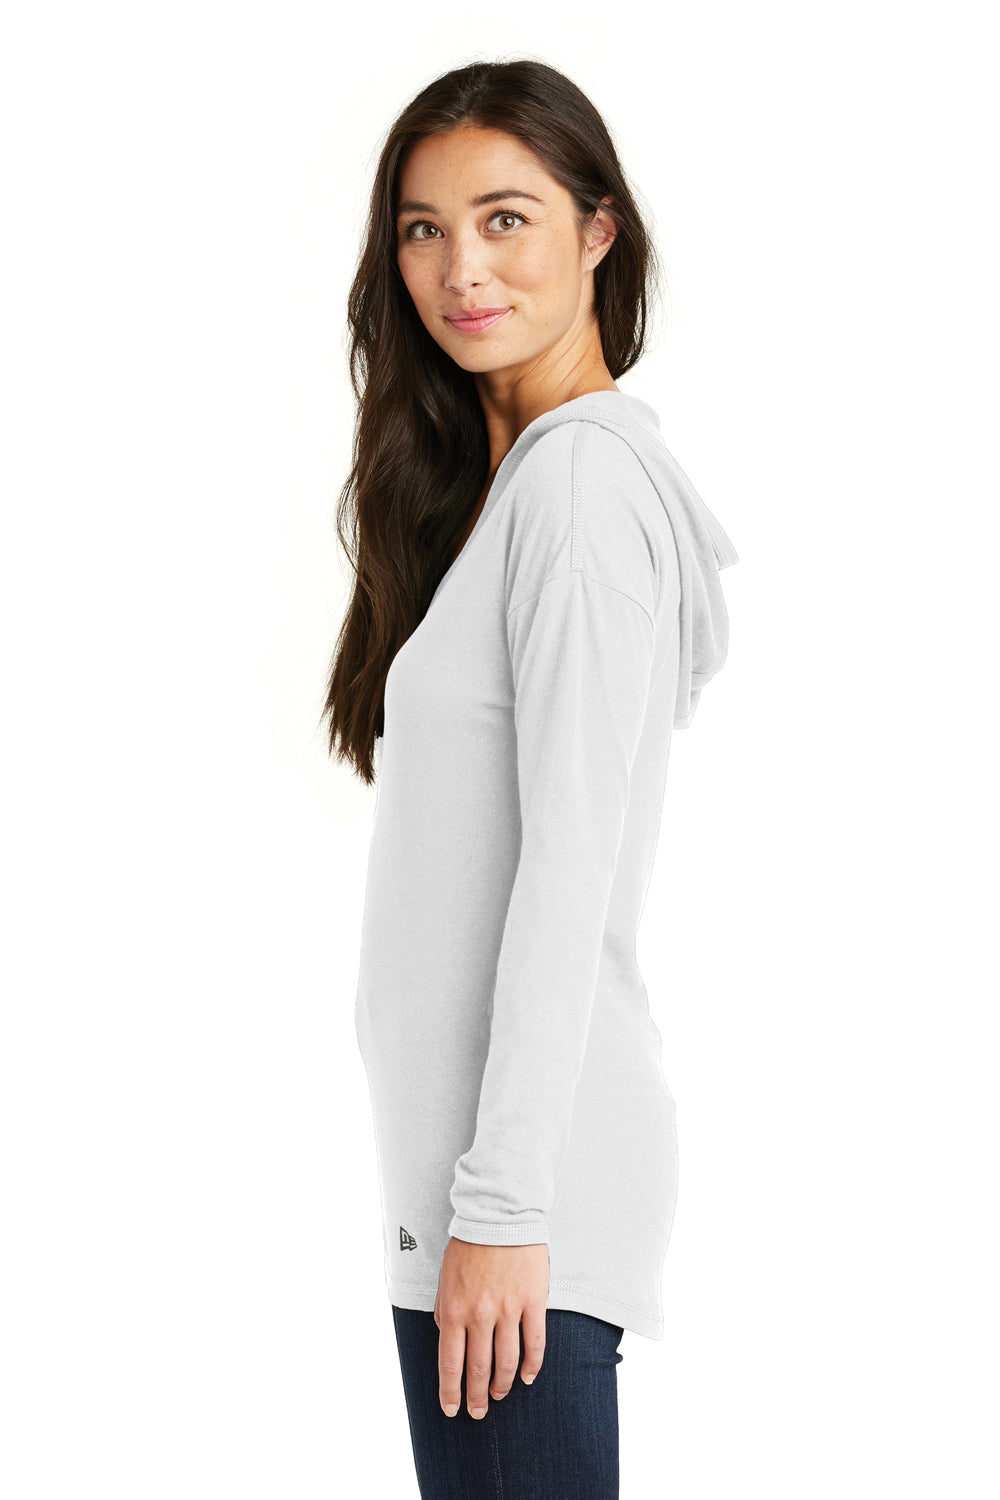 New Era LNEA131 Womens Performance Moisture Wicking Long Sleeve Hooded T-Shirt Hoodie White Side